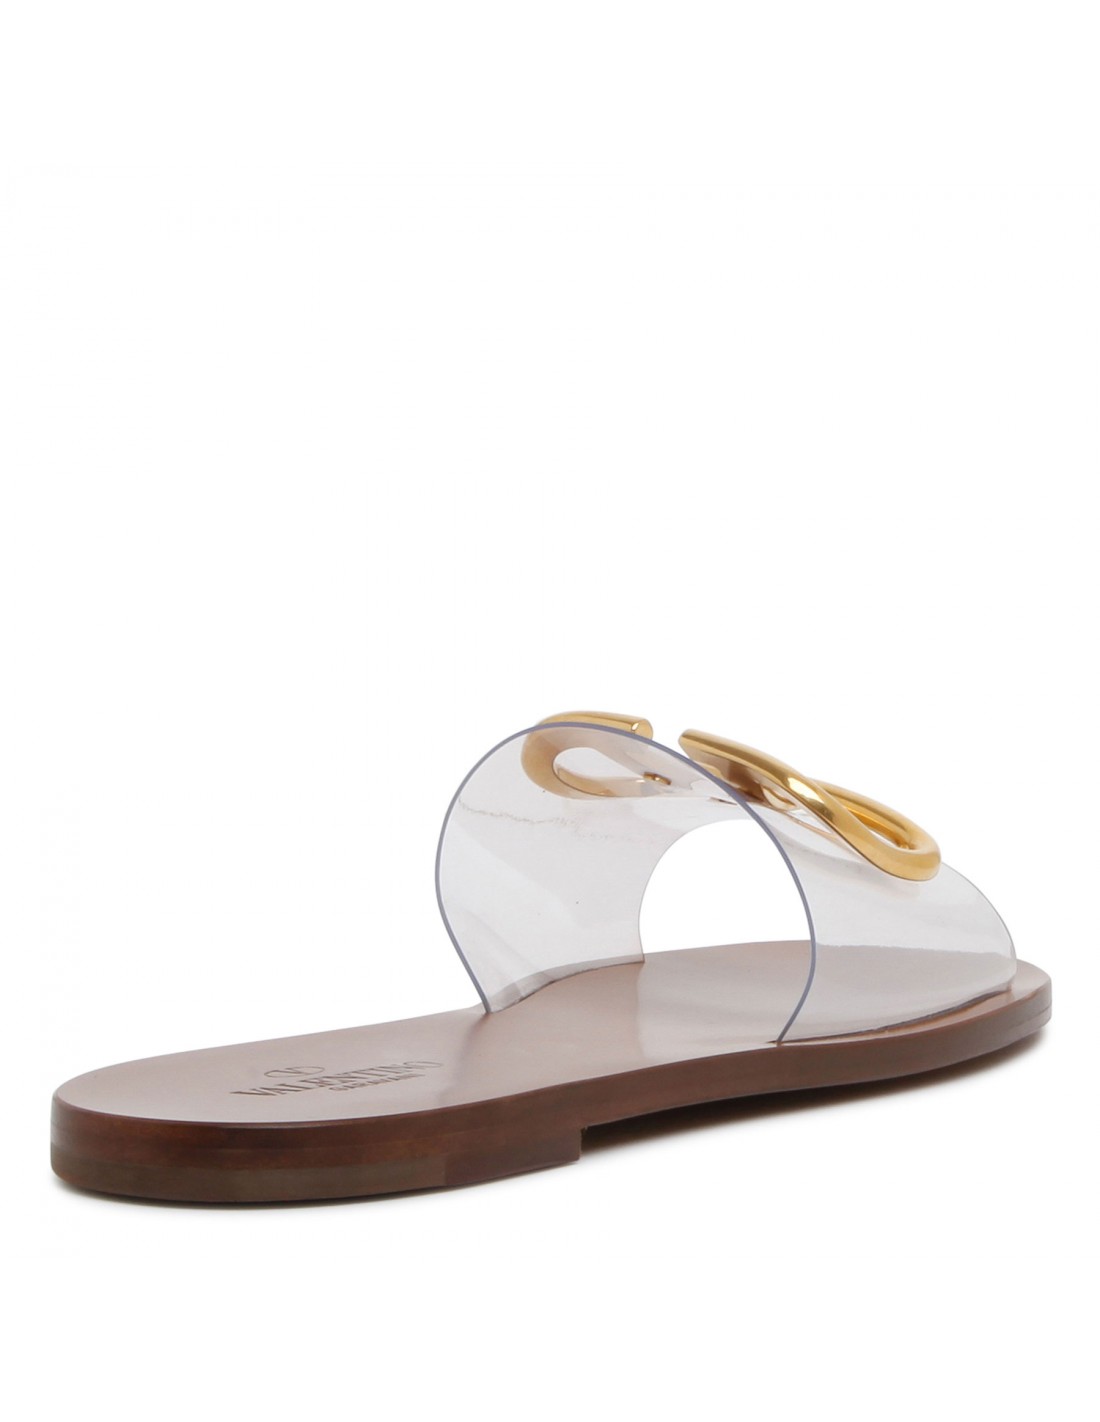 VLogo signature slide sandals